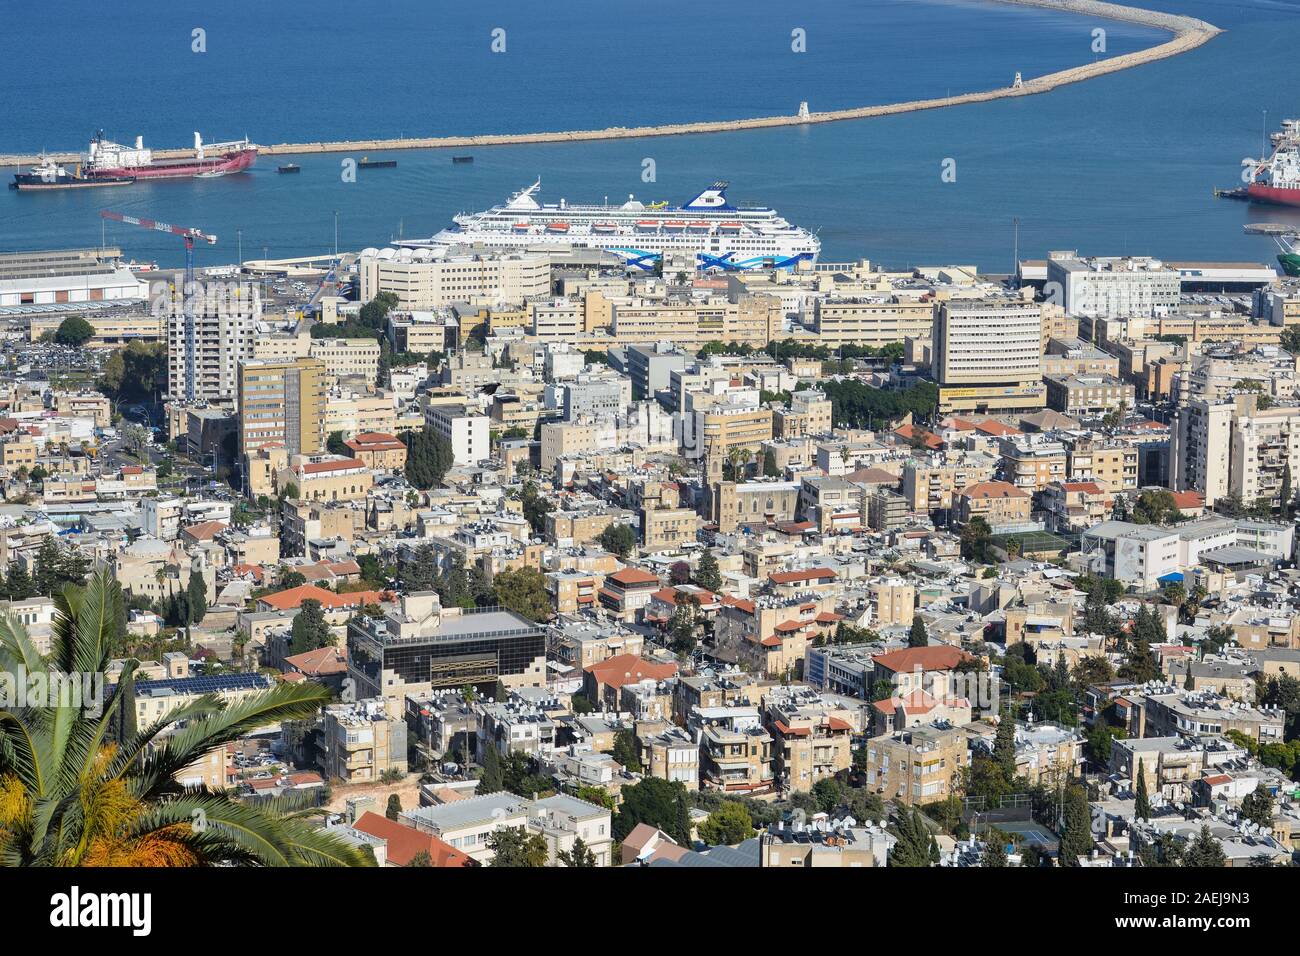 View of Haifa from the hill. Haifa is an Israeli city and port on the Mediterranean Sea. Stock Photo